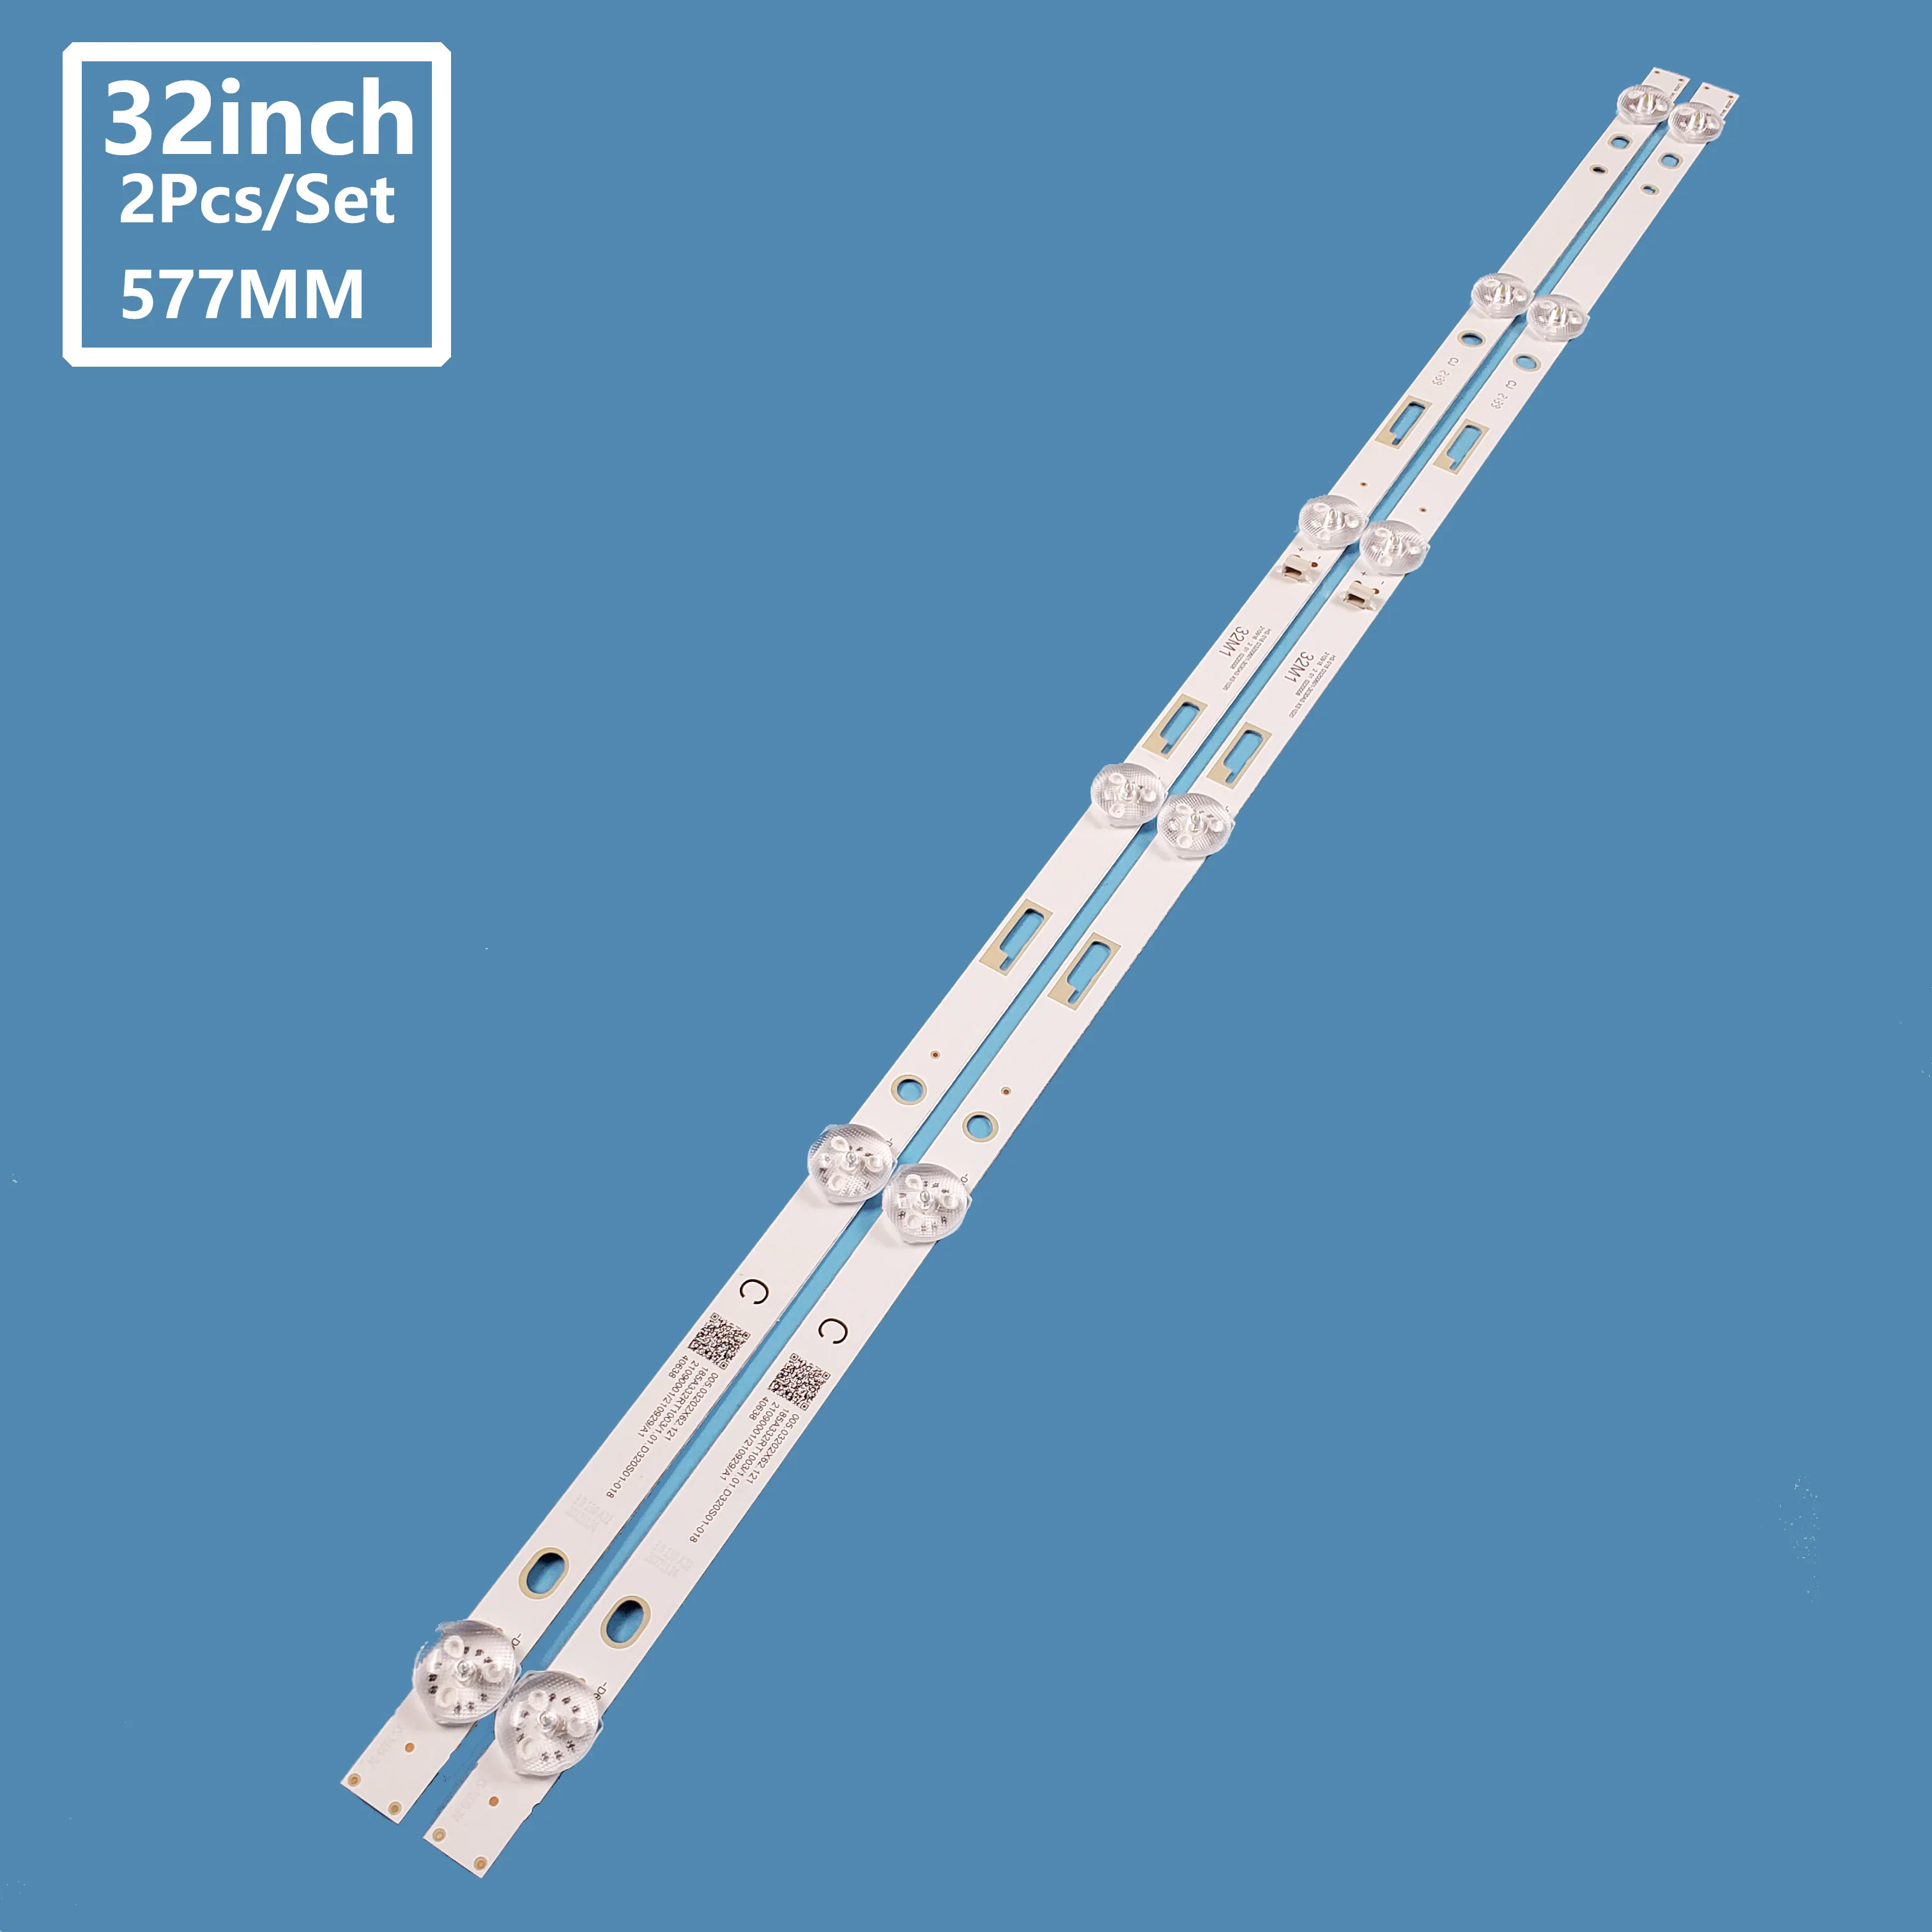 LED TV Backlight Strip For HS 018 D3200601-3030AS  32inch TV Back Light Bar LED Strip